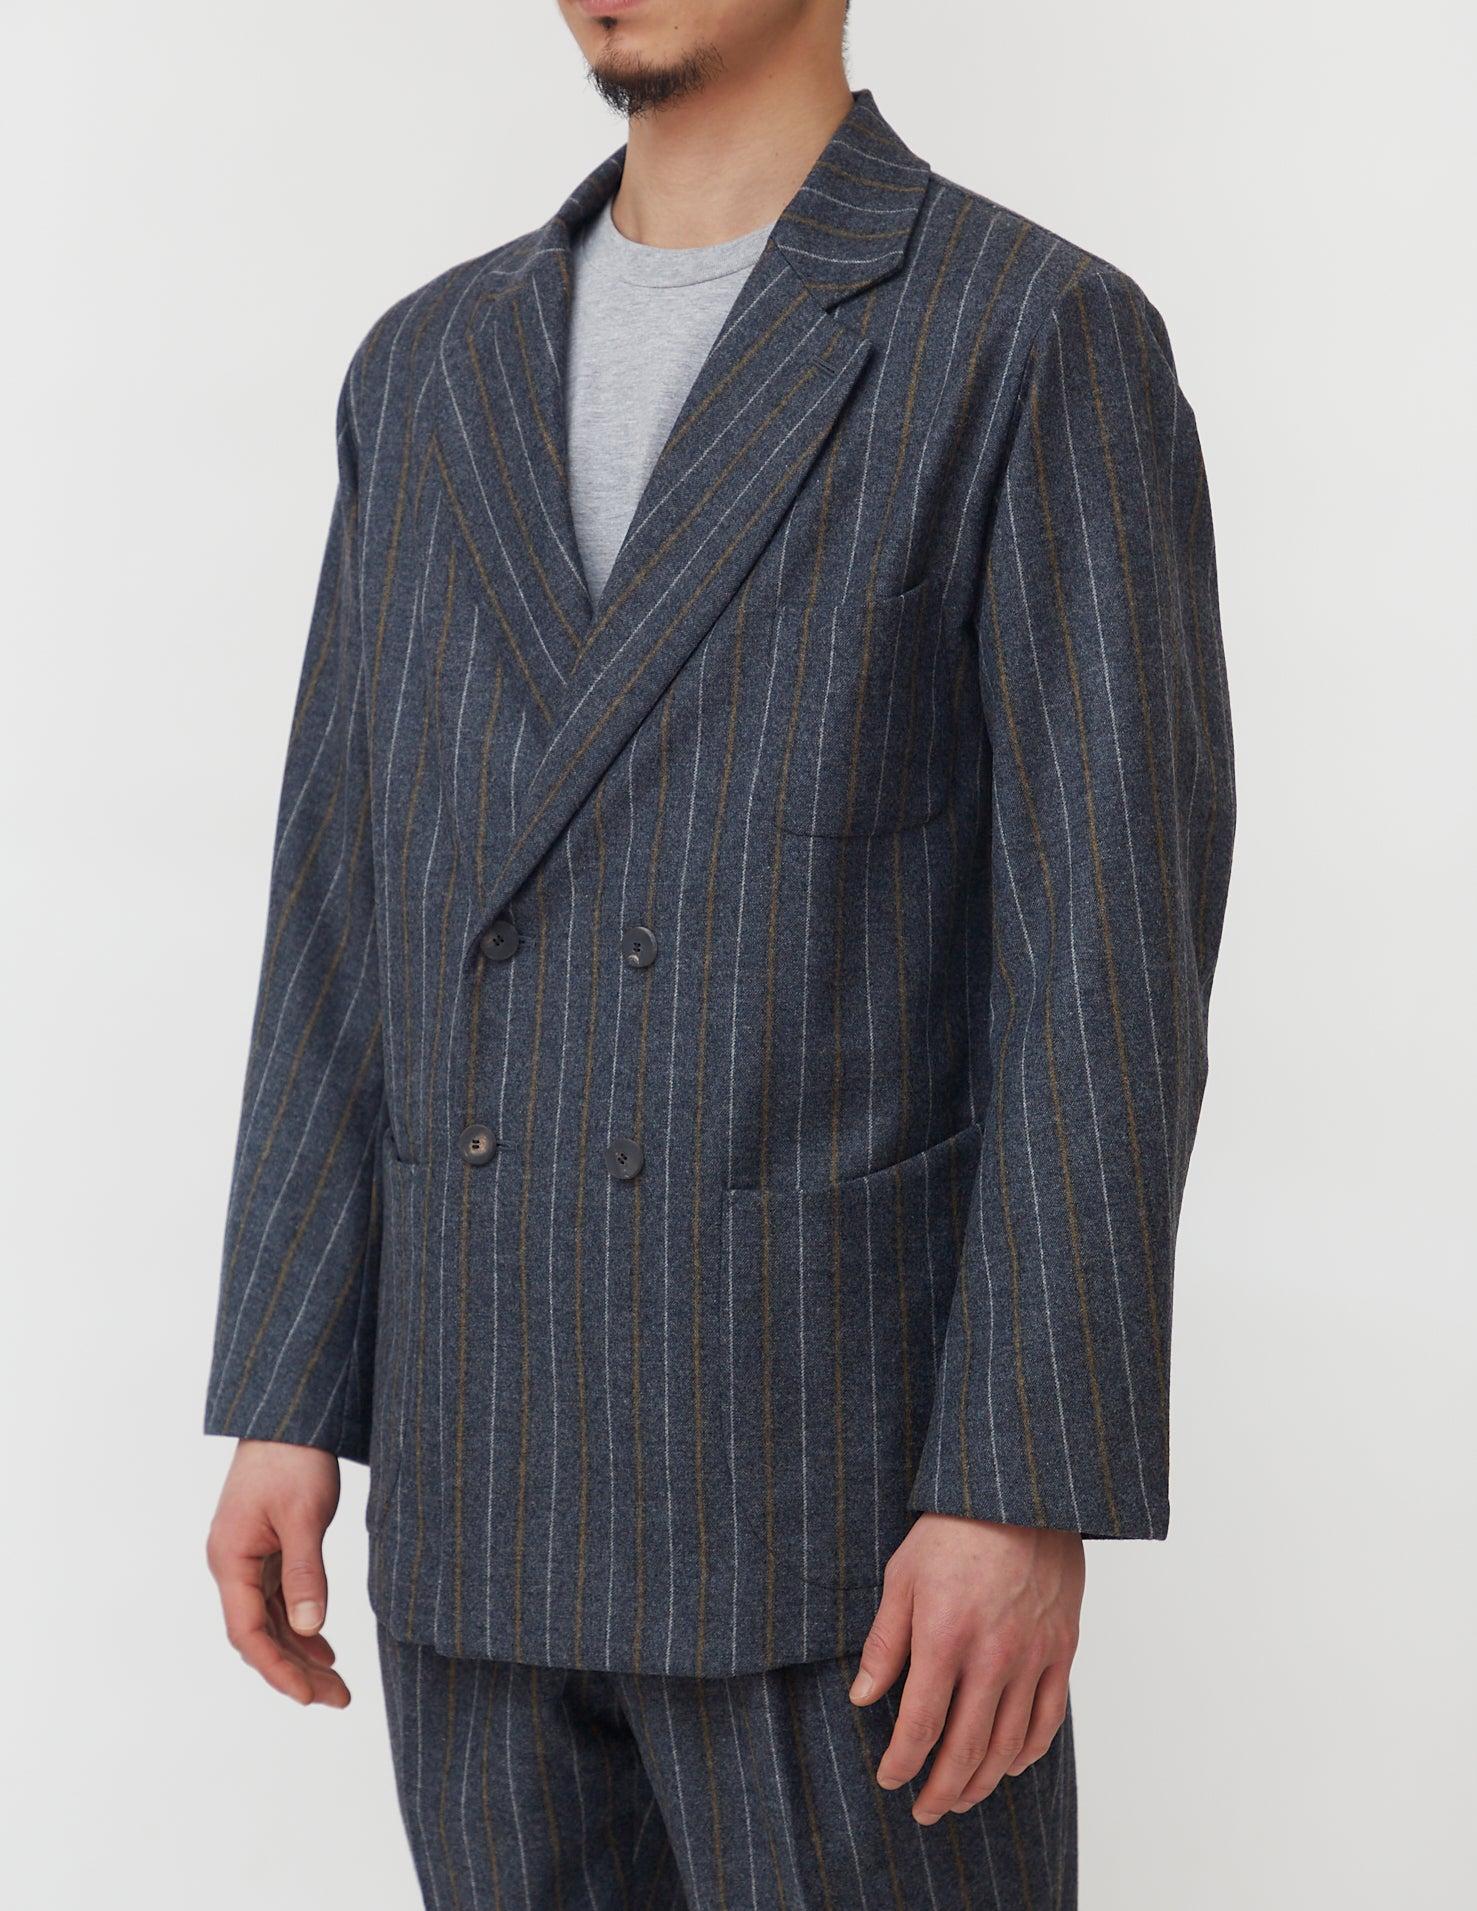 Comfort Loosen Jacket gray x yellow&white stripe 4B SINGLE / 4B DOUBLE